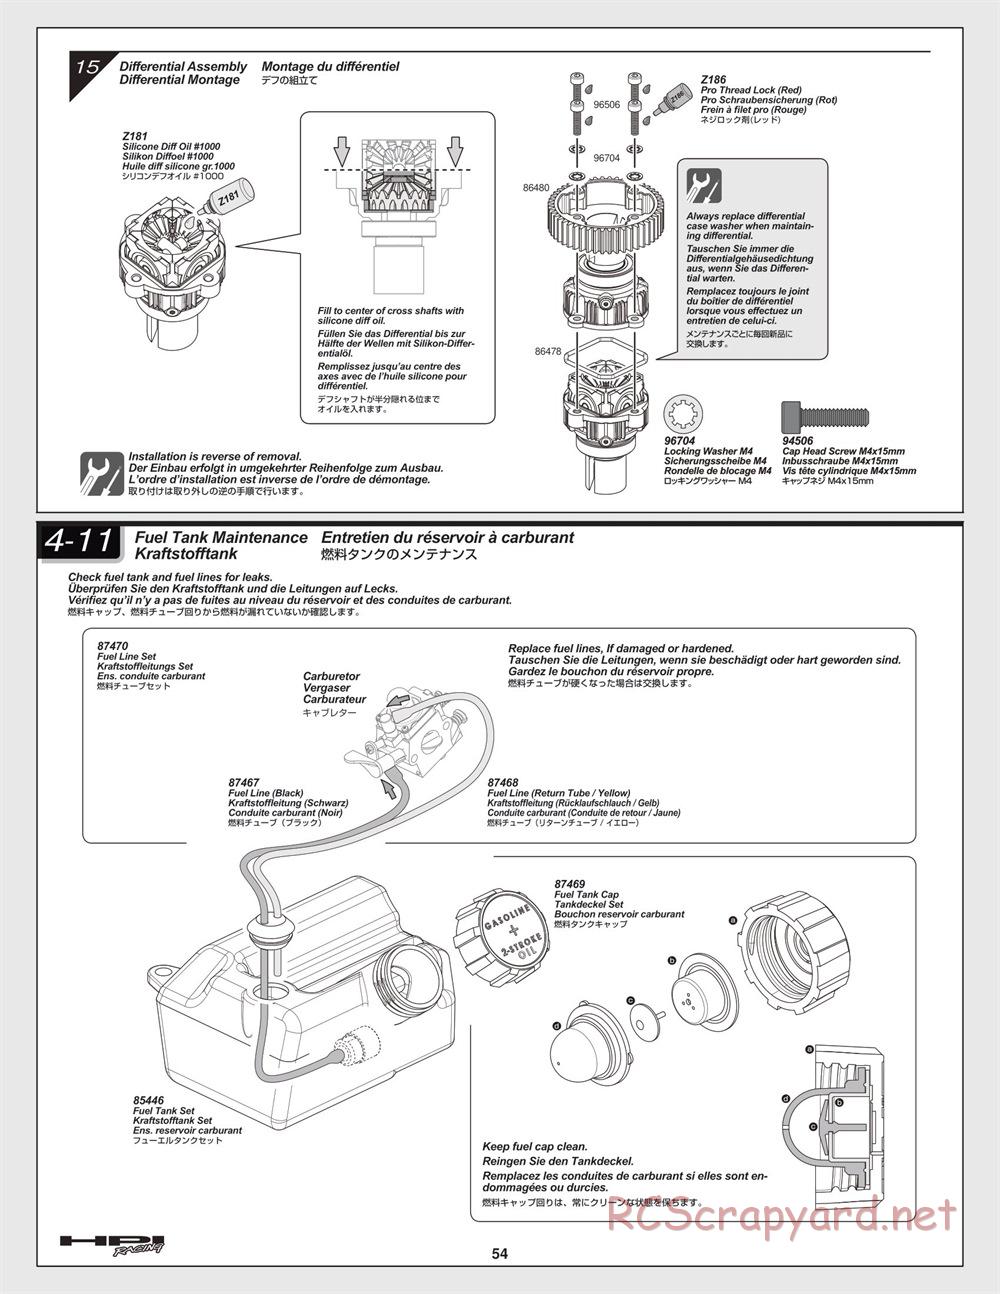 HPI - Baja 5B 2.0 - Manual - Page 54